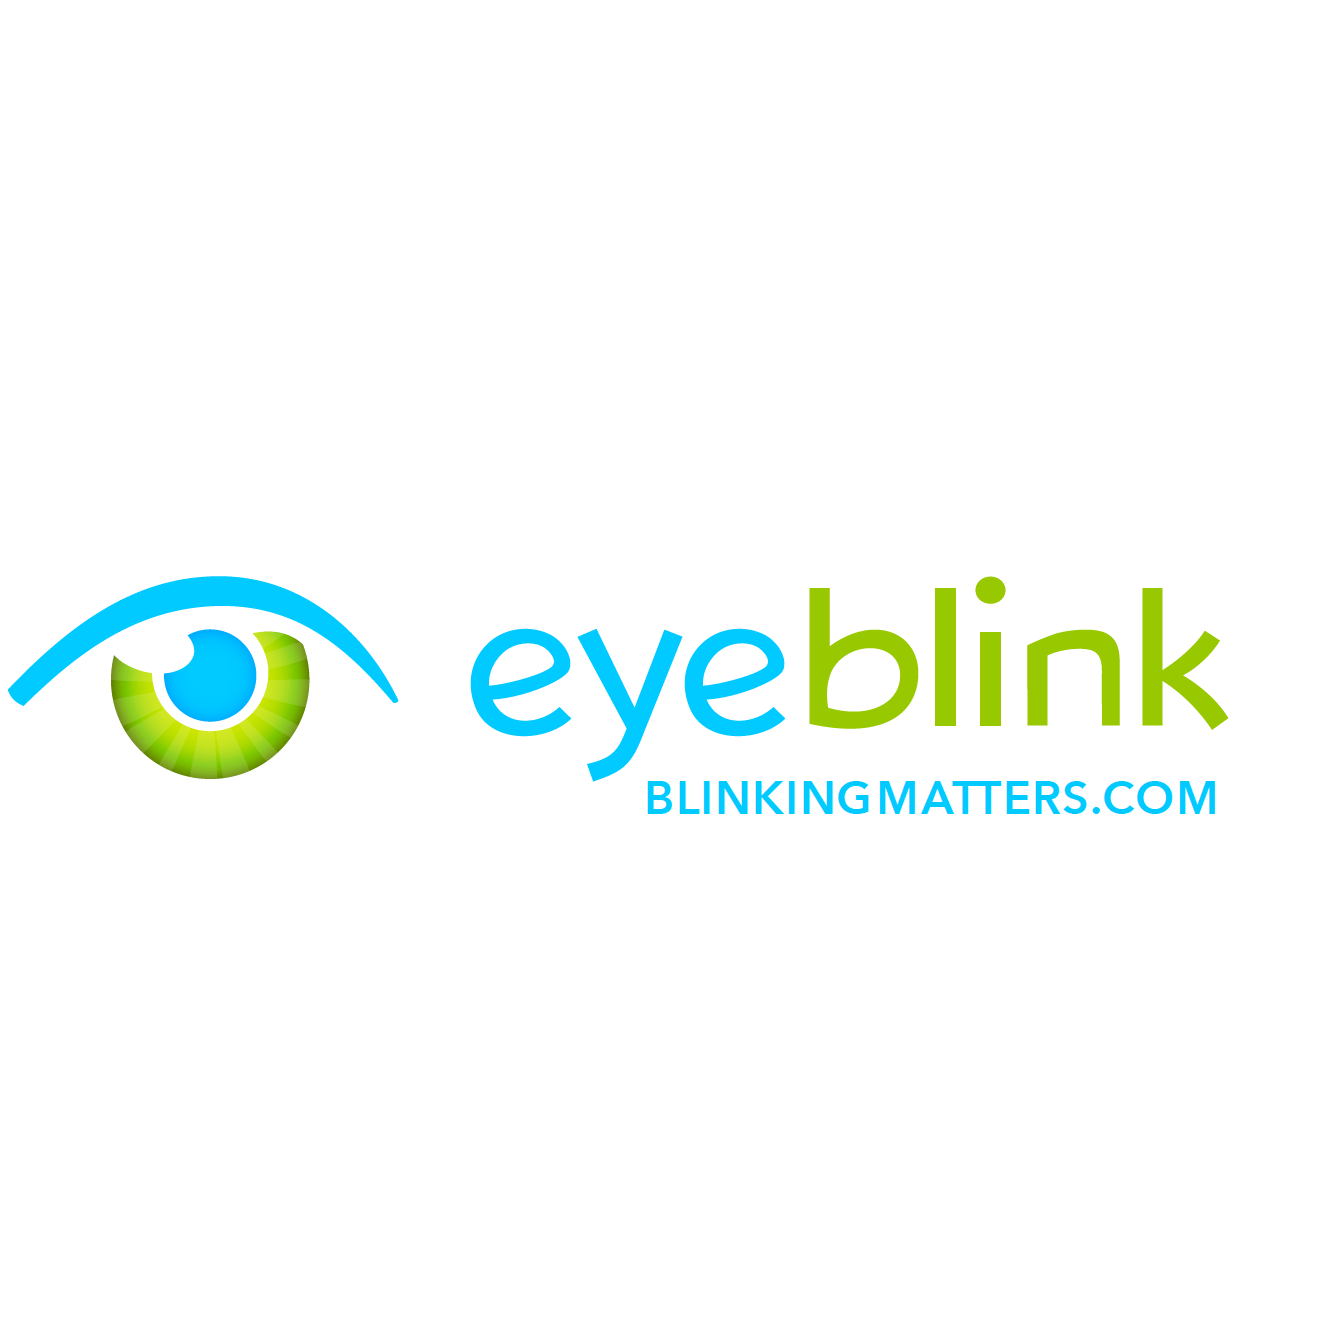 eyeblink logo square edited